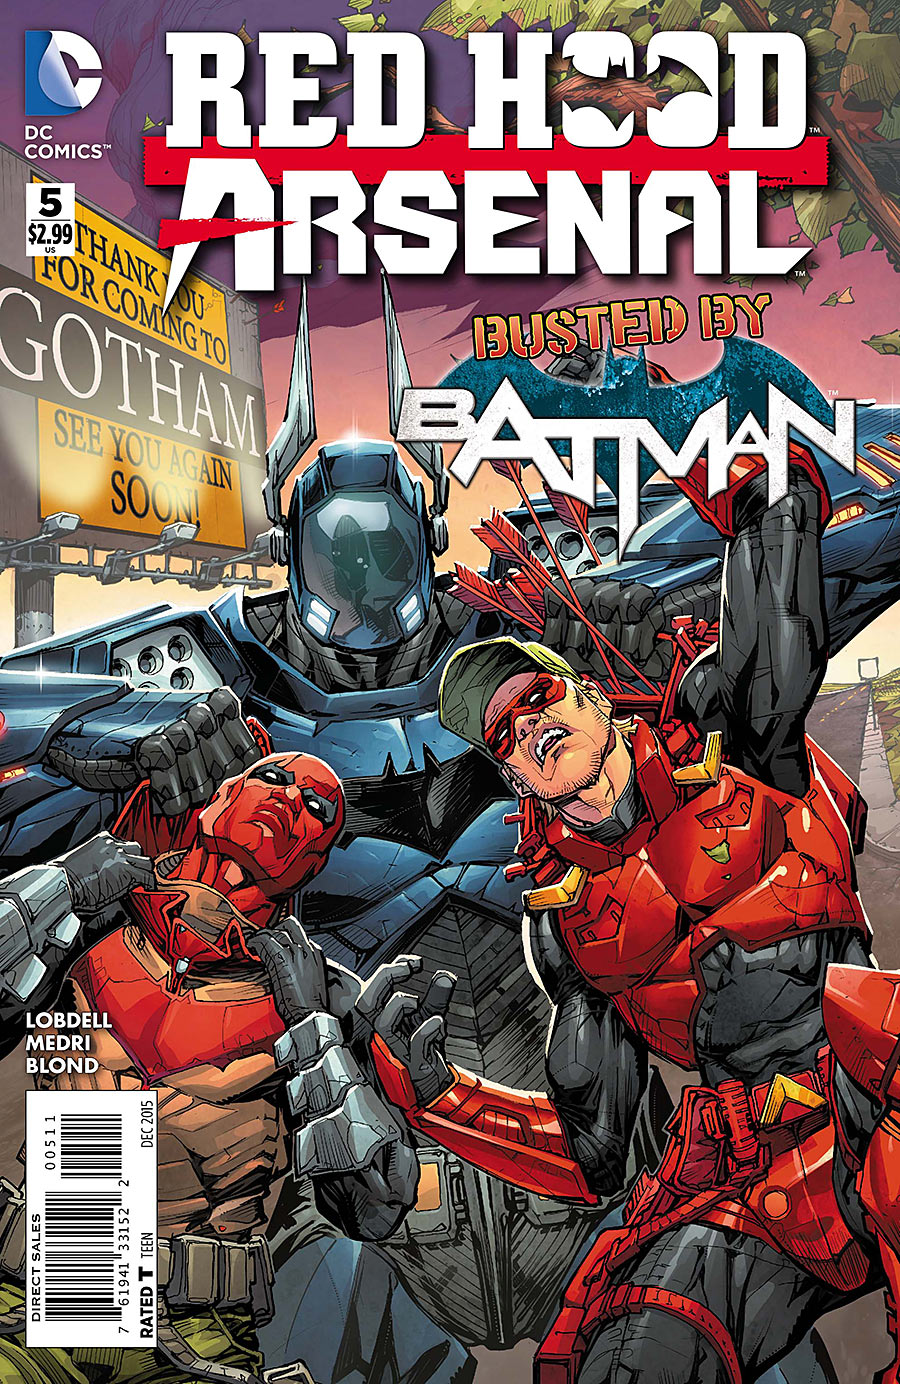 Red Hood/Arsenal (Volume 1) Issue 5 | Batman Wiki | Fandom